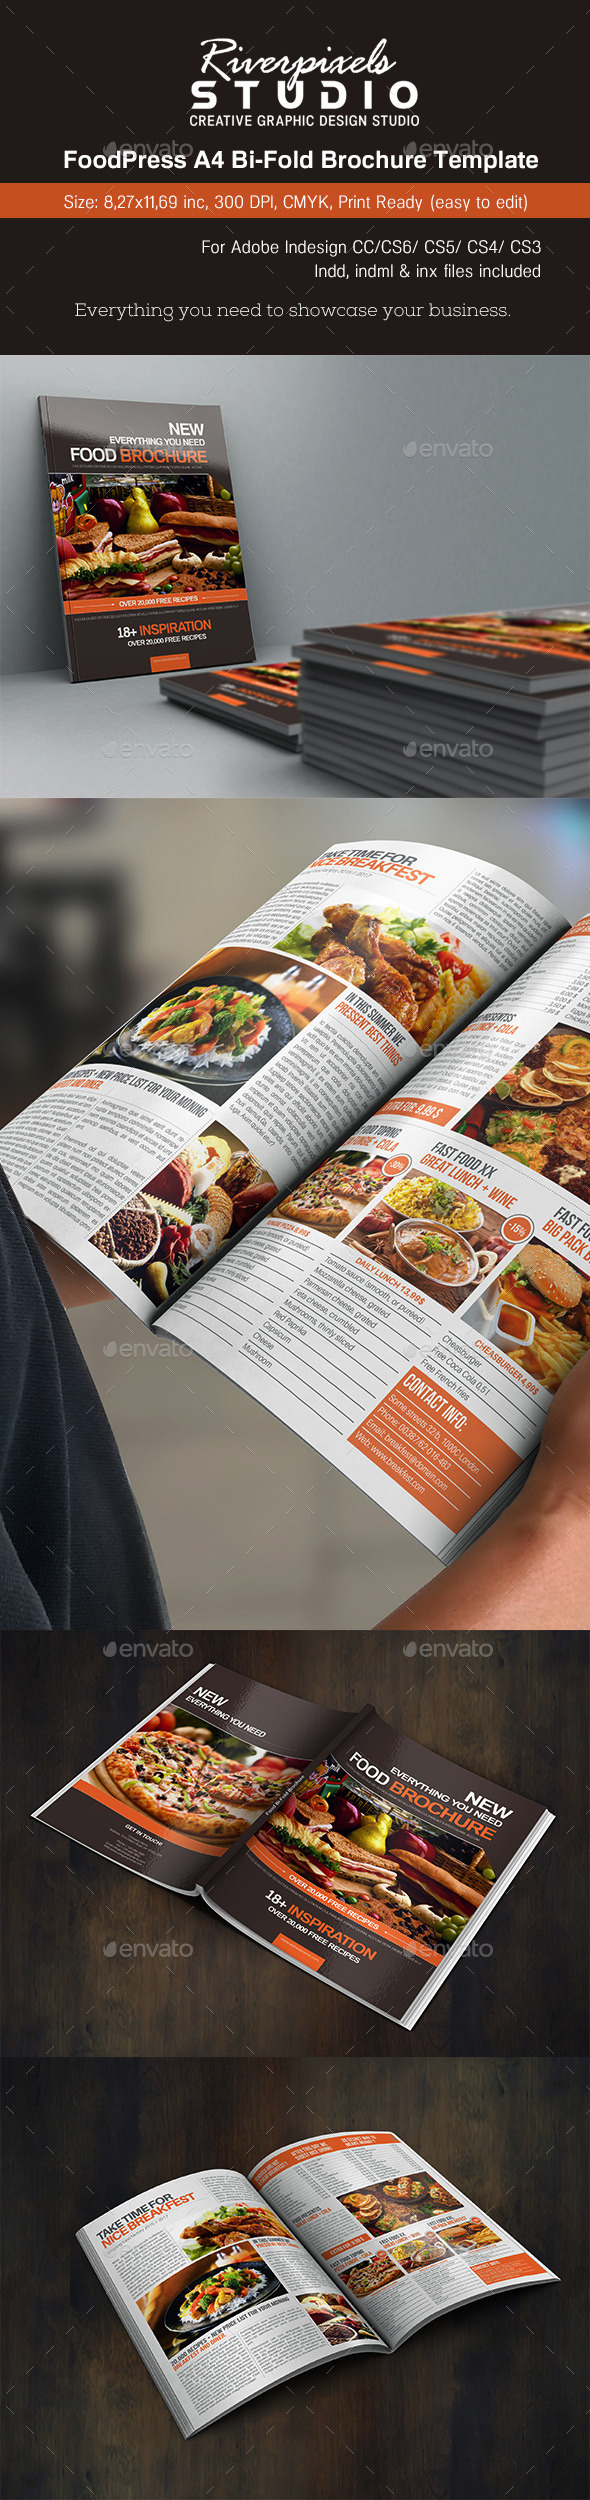 FoodPress BiFold Brochure Template